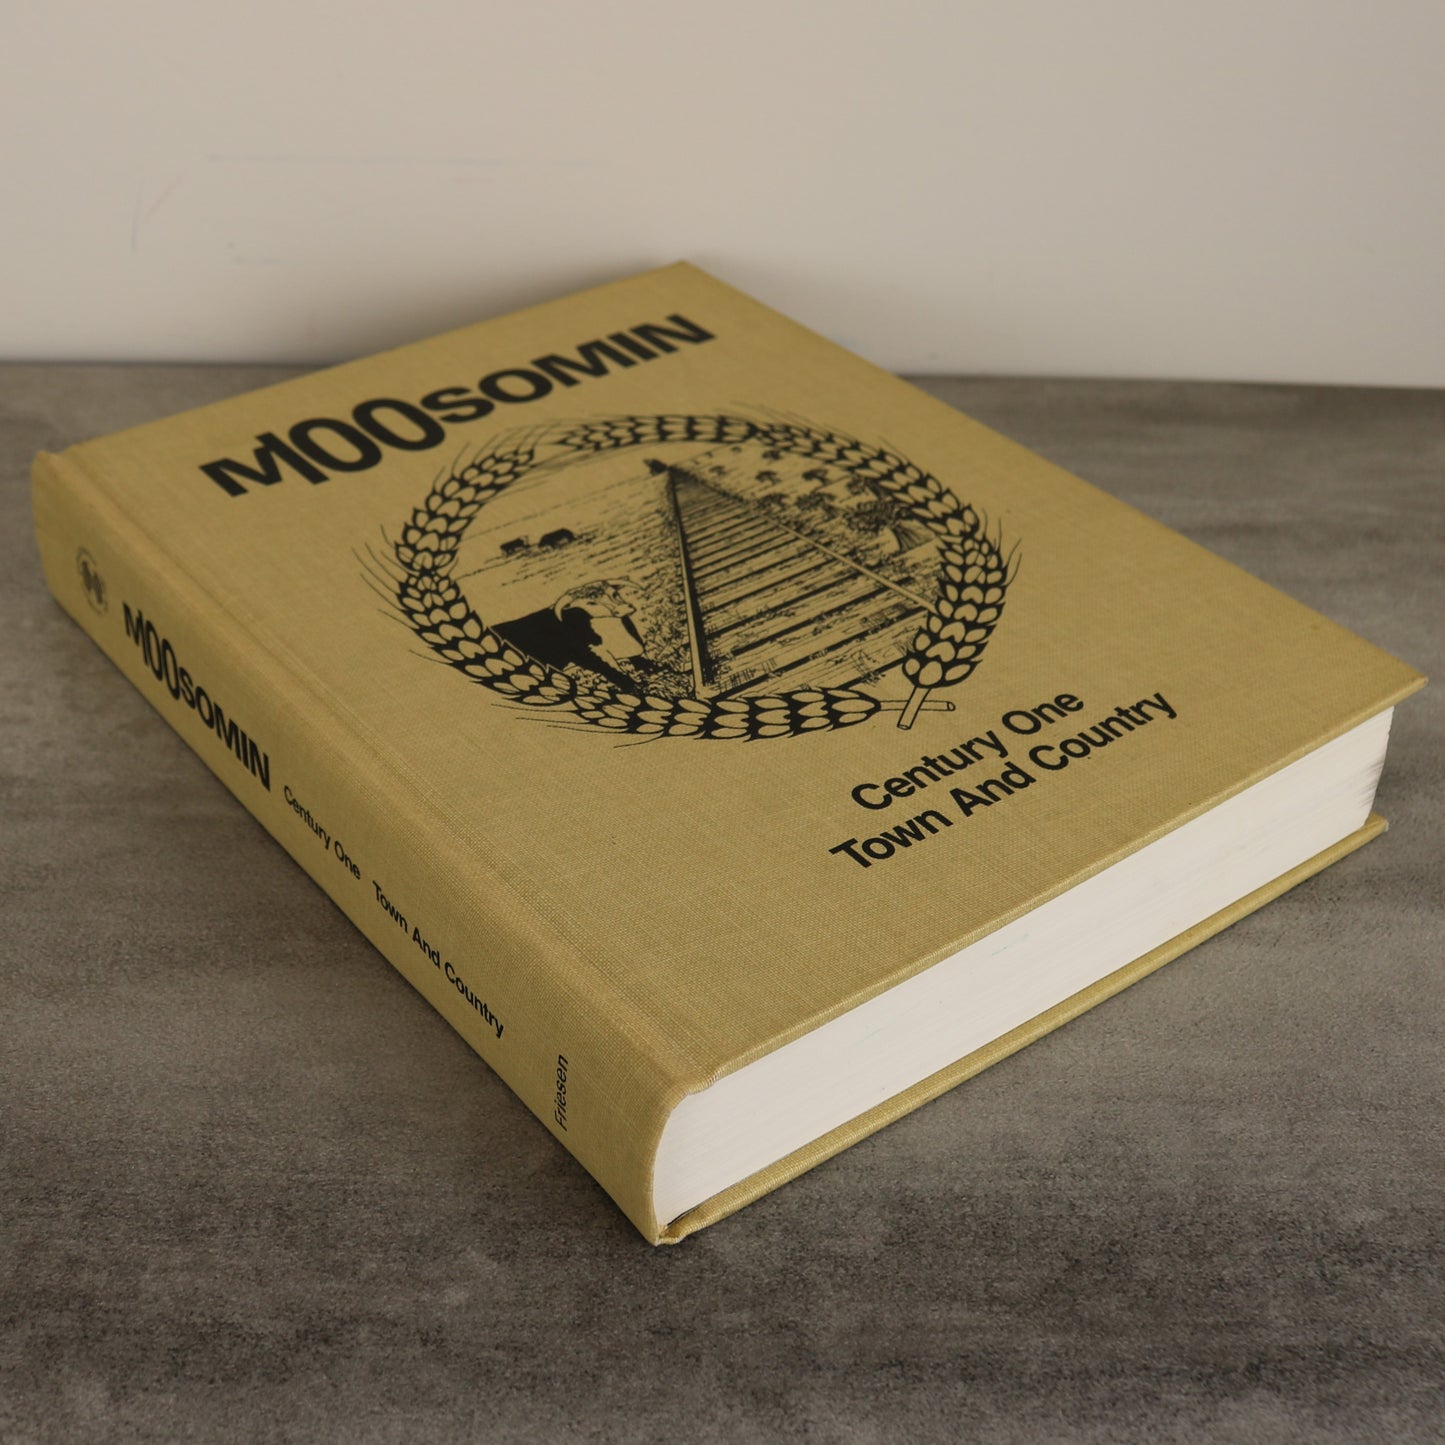 Moosomin Saskatchewan Canada Canadian Local History Used Book